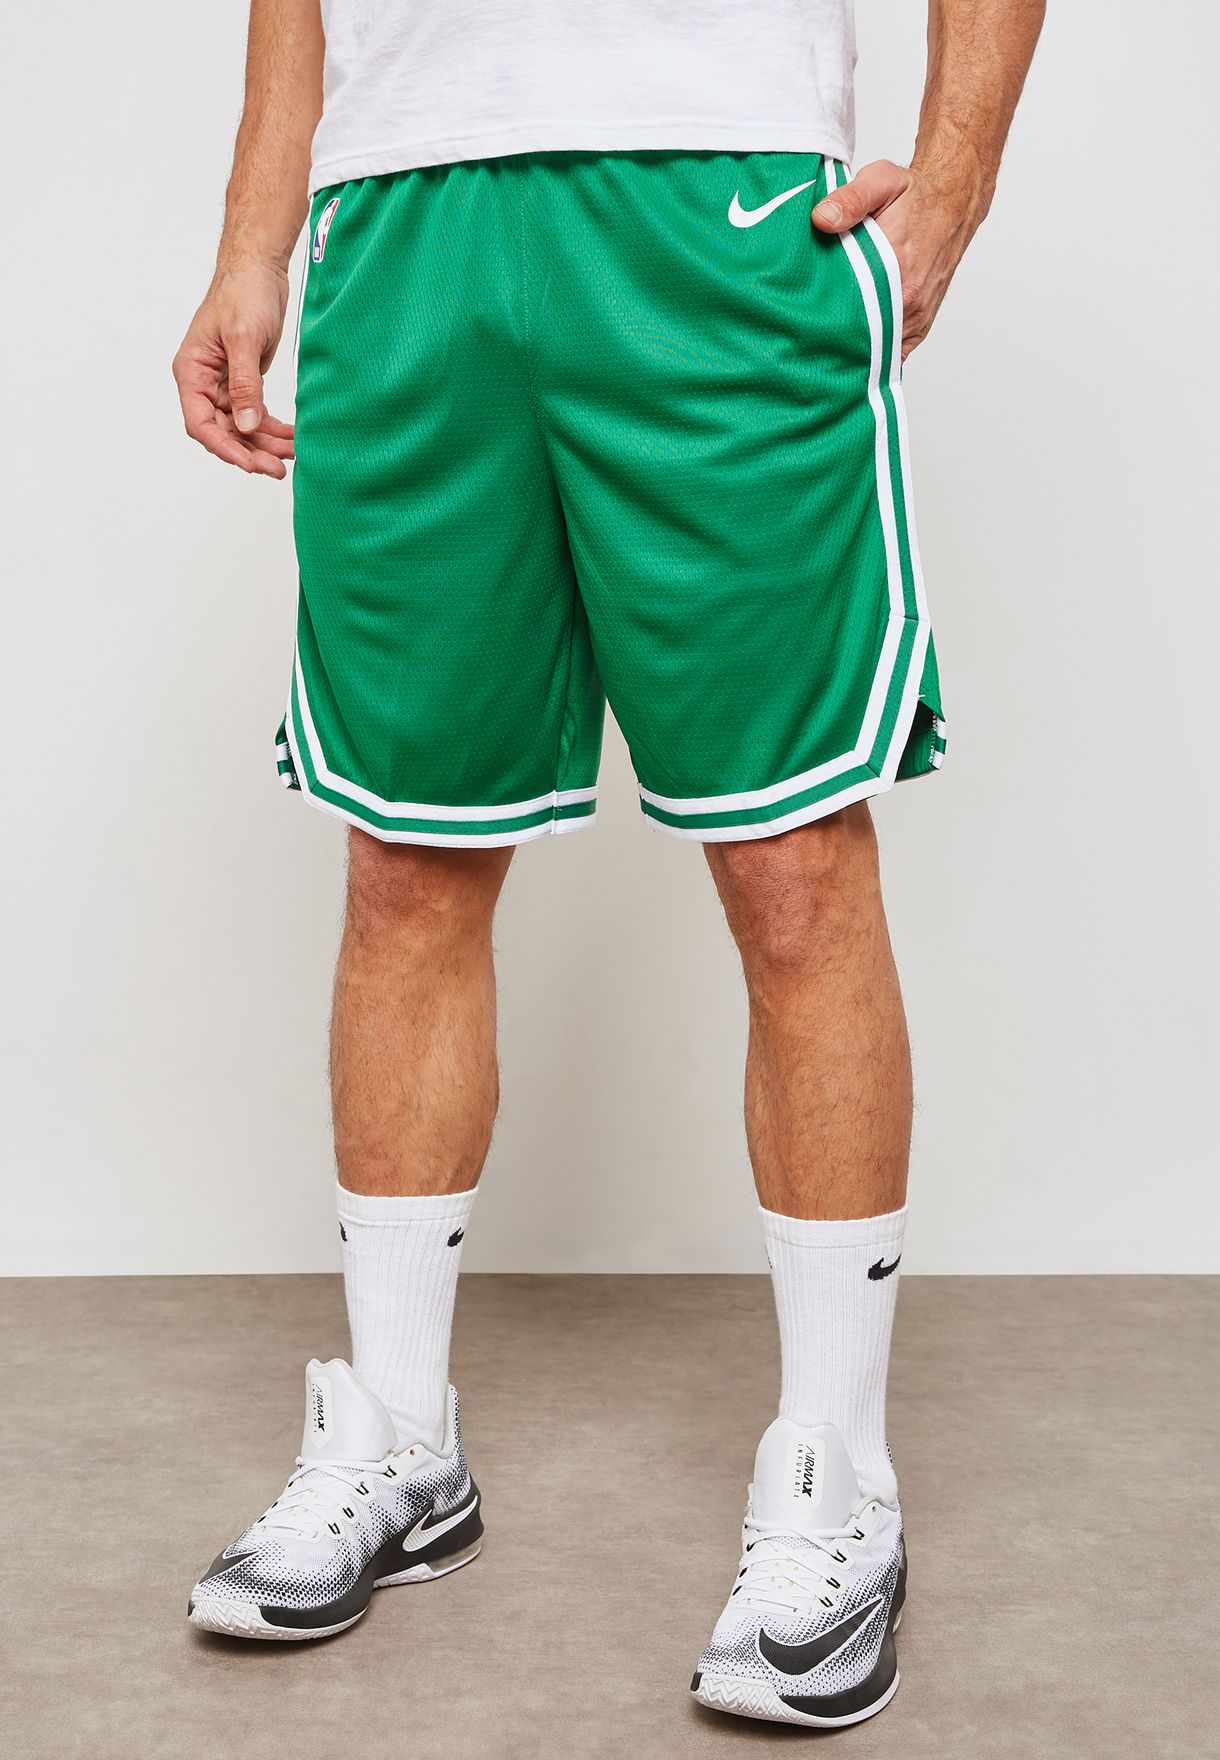 Boston Celtics Swingman Road Shorts 